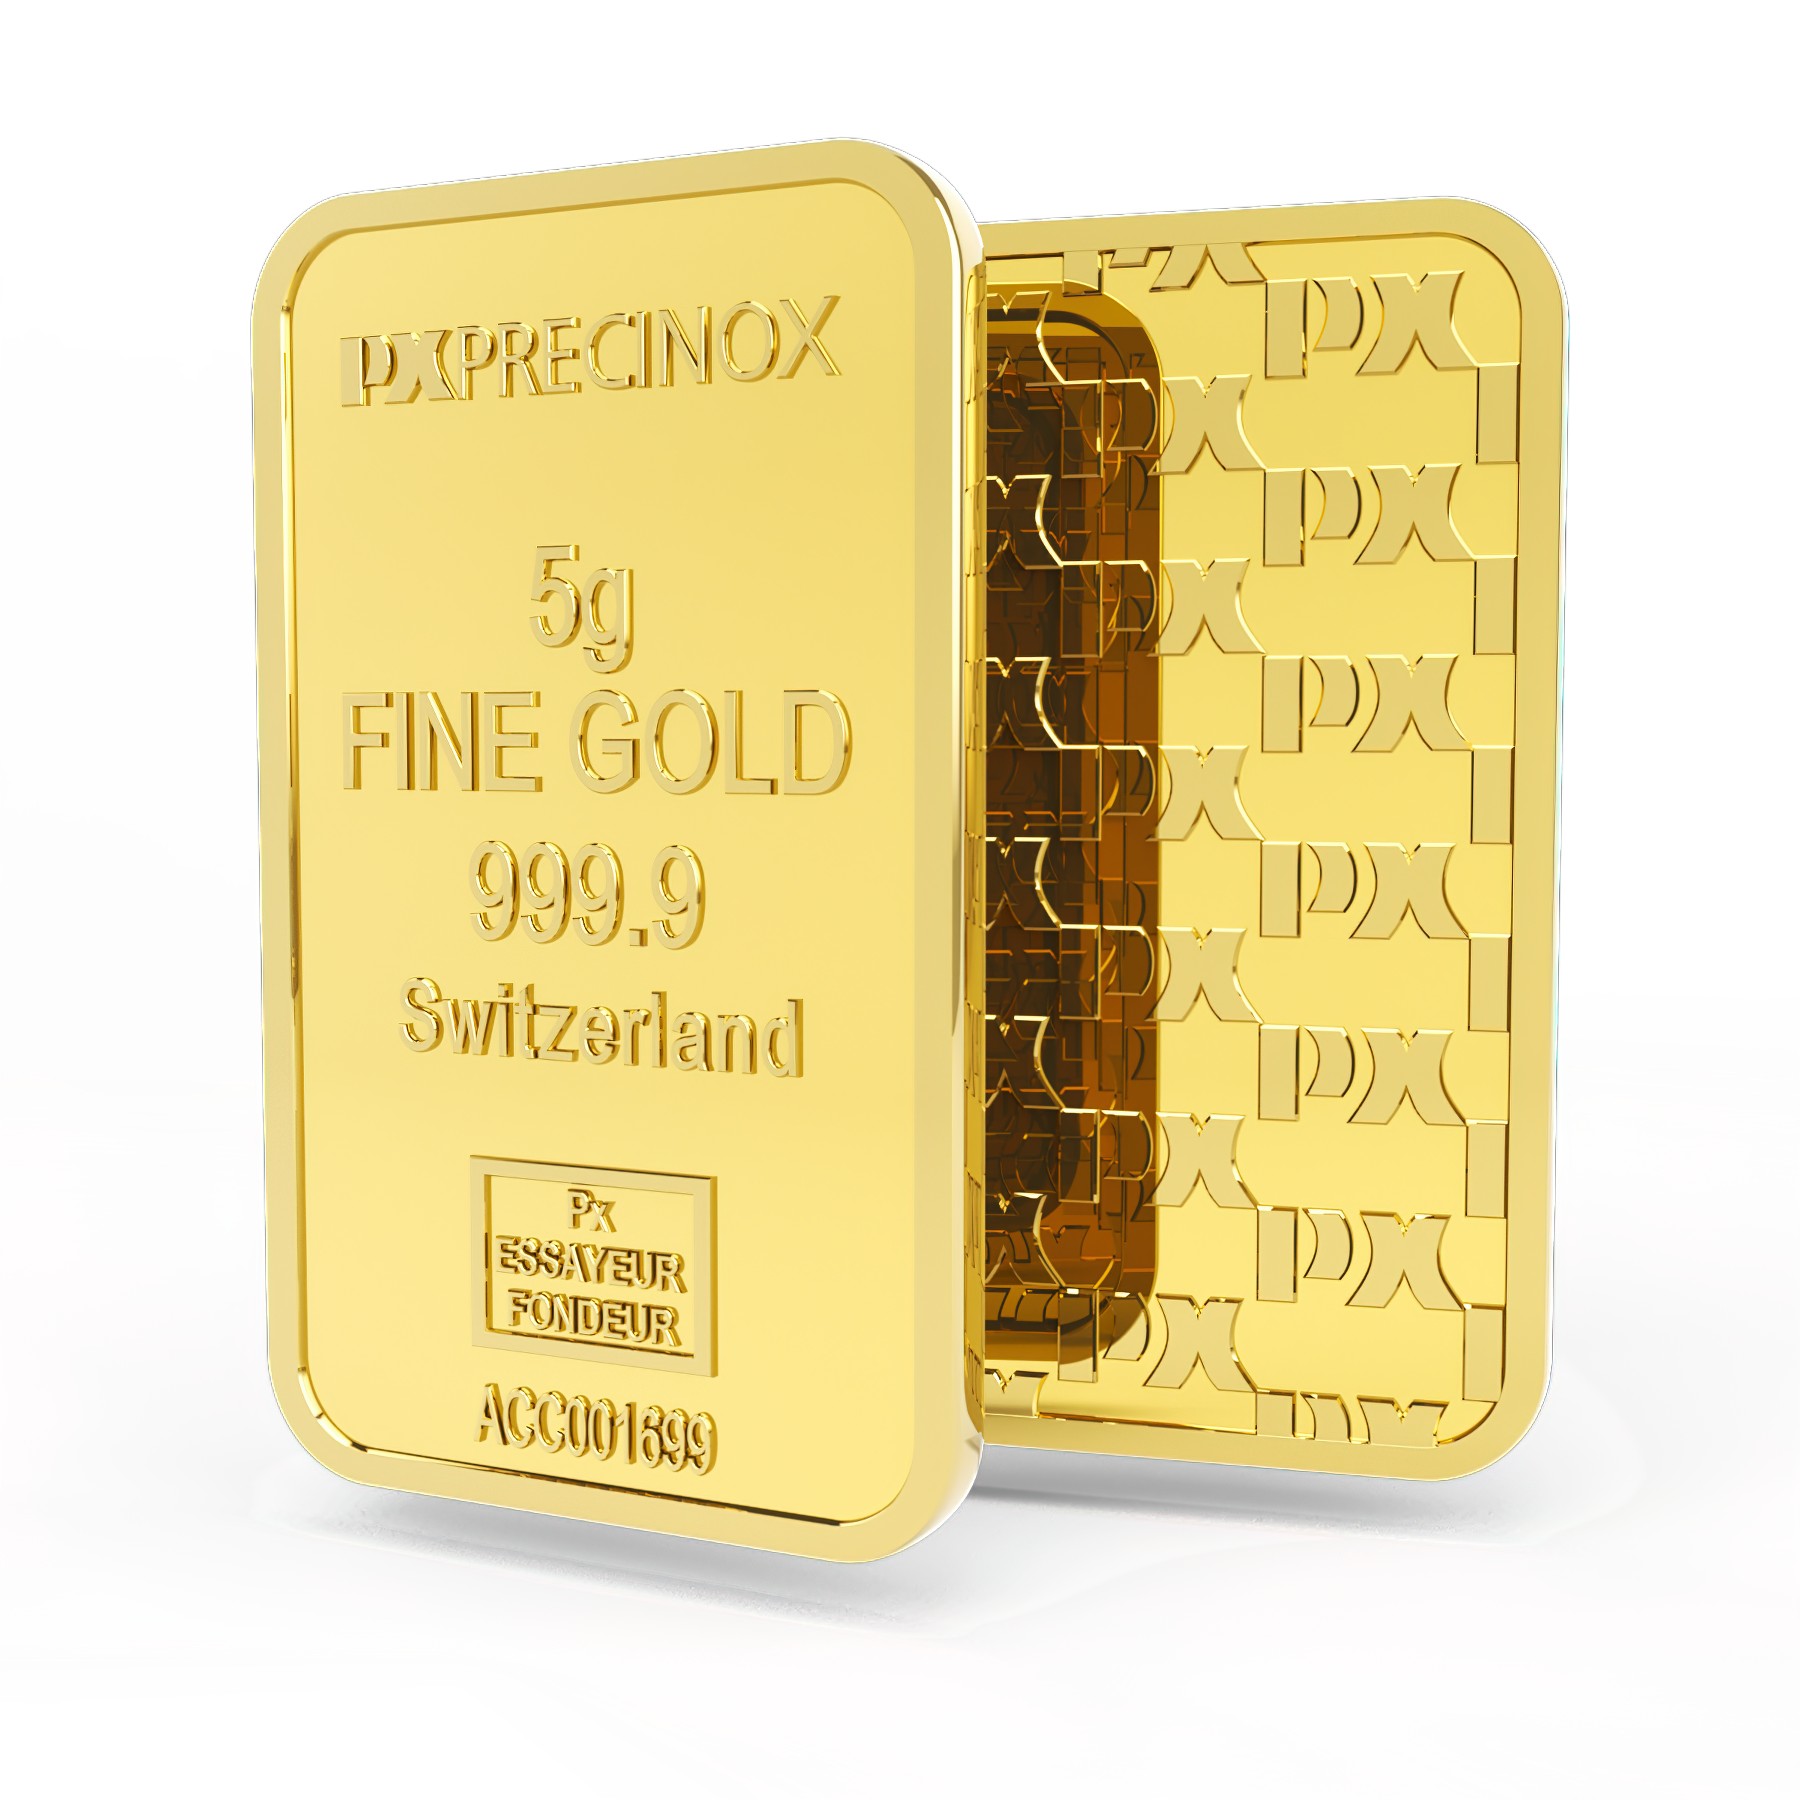 Lingou aur 5 gr, Elvetia, Fine Gold 999,9